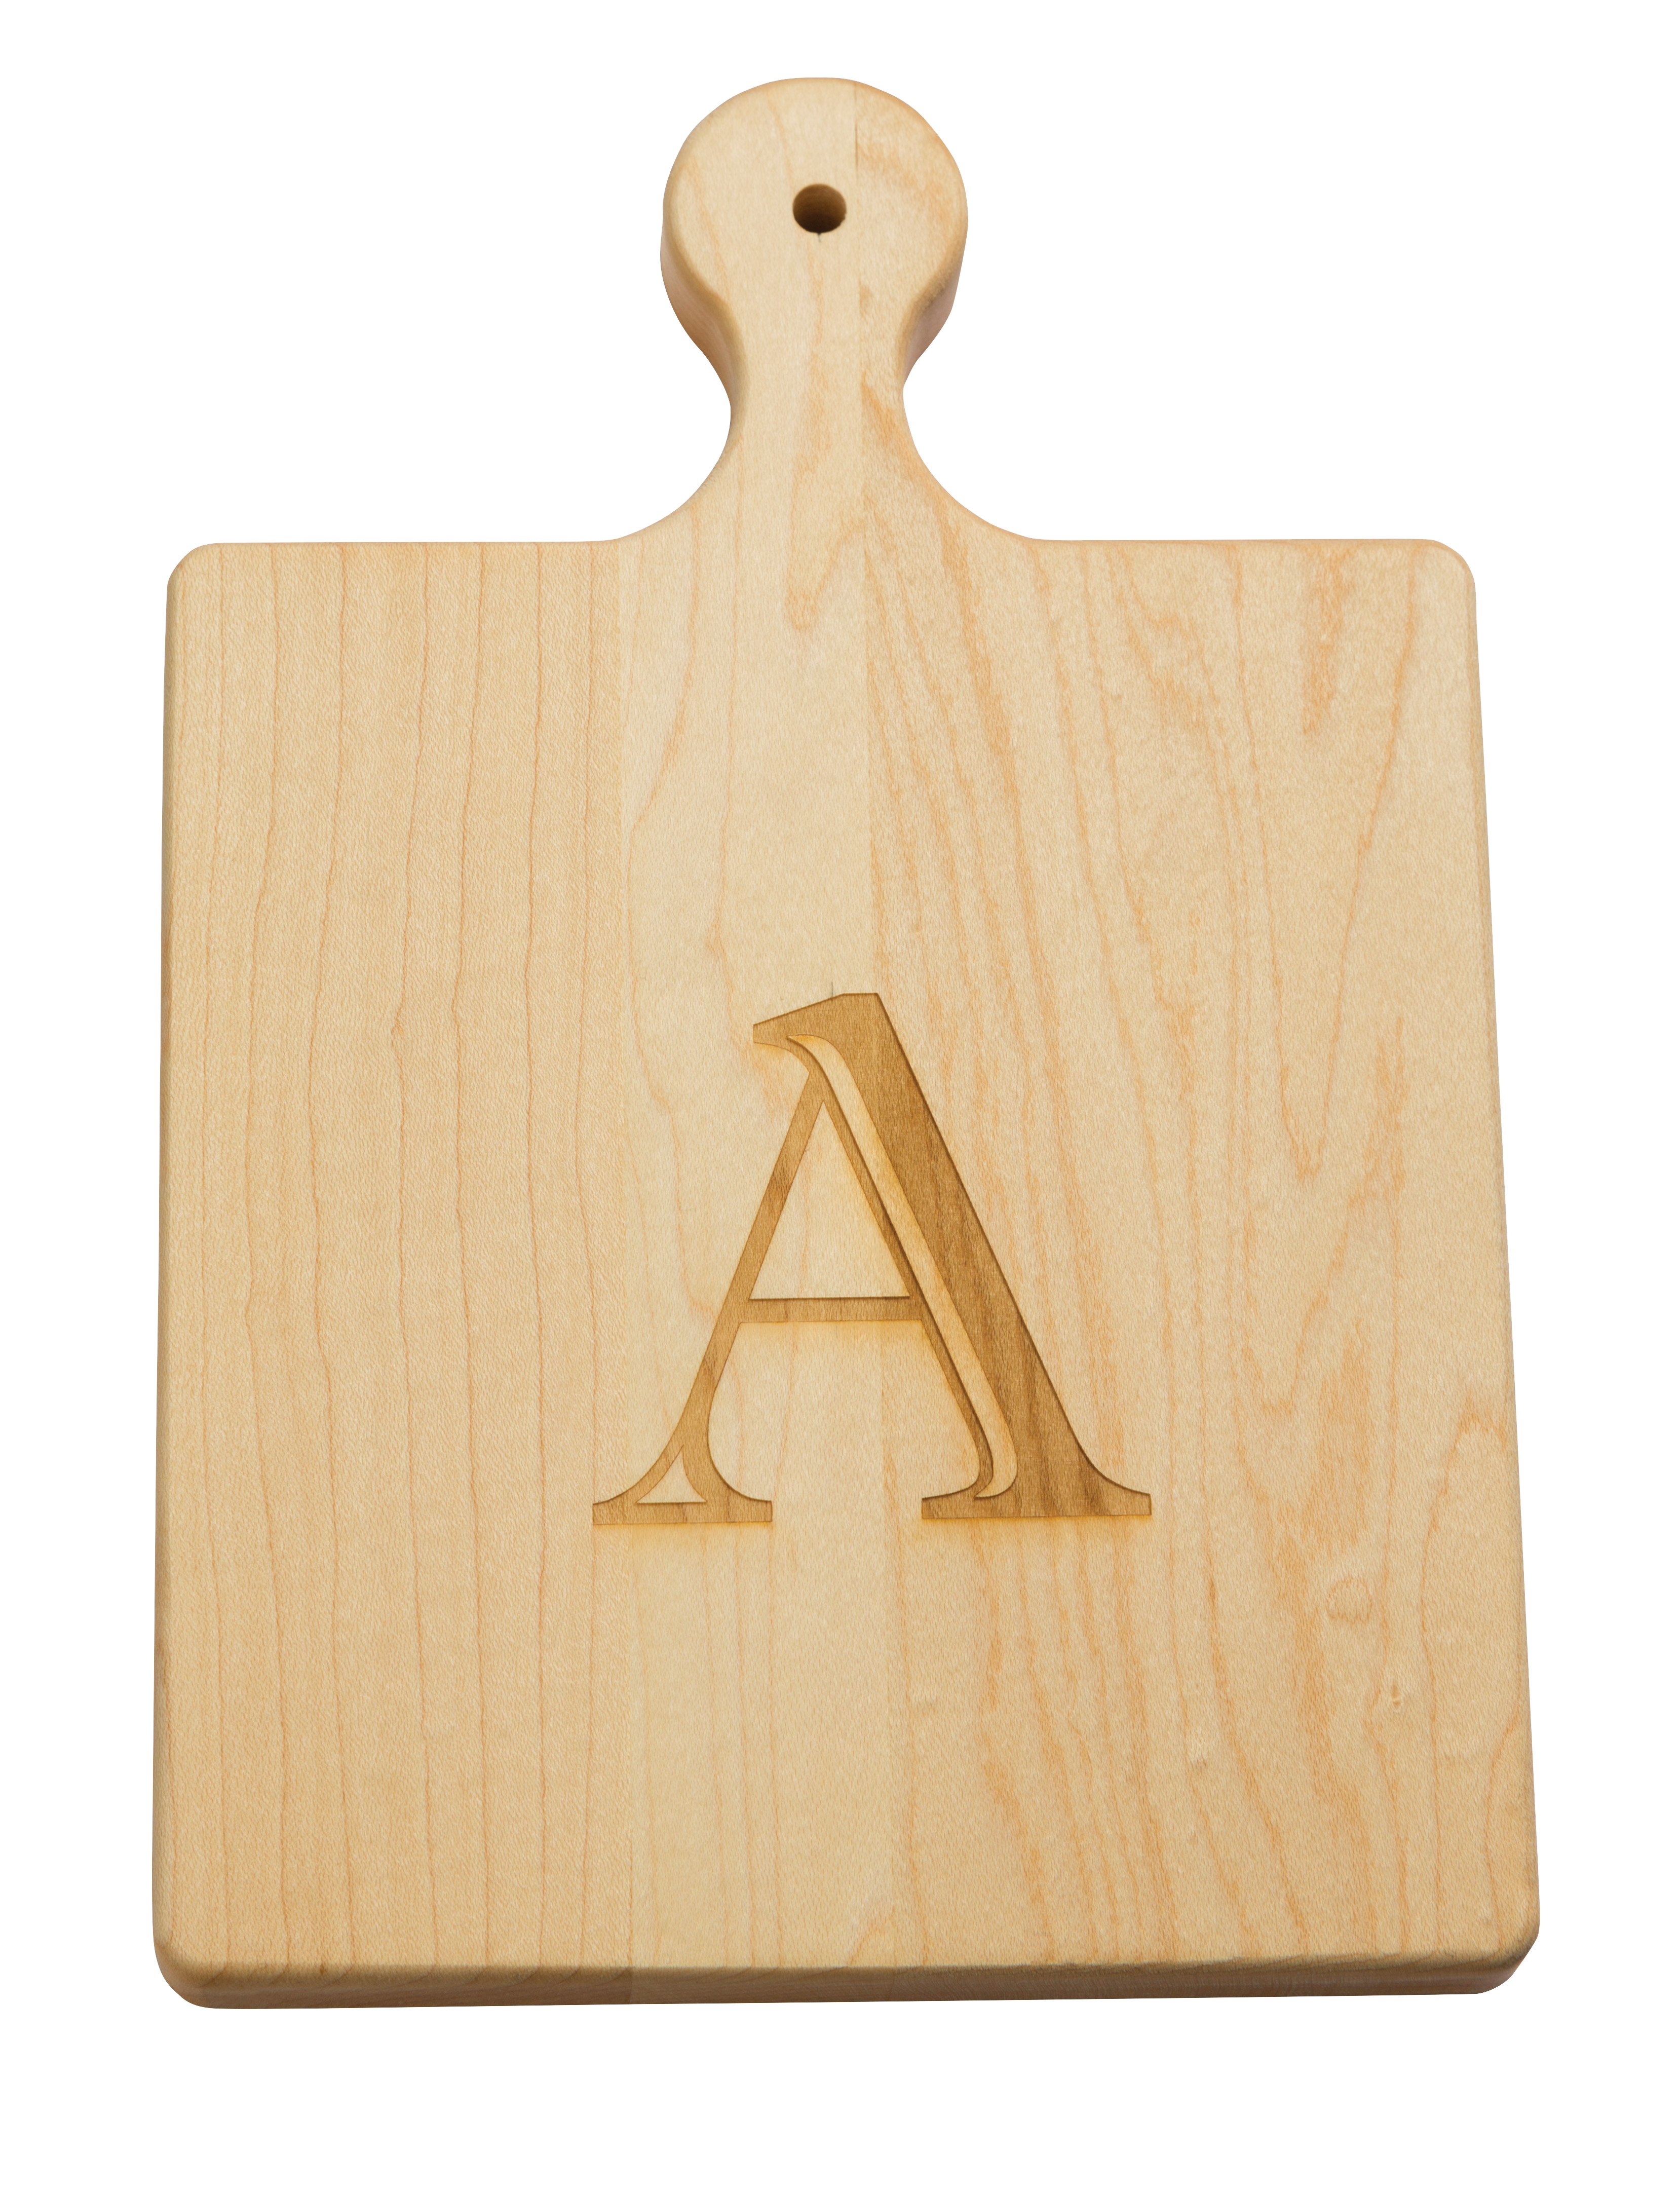 Maple 9-inch Artisan Initial Cutting Board